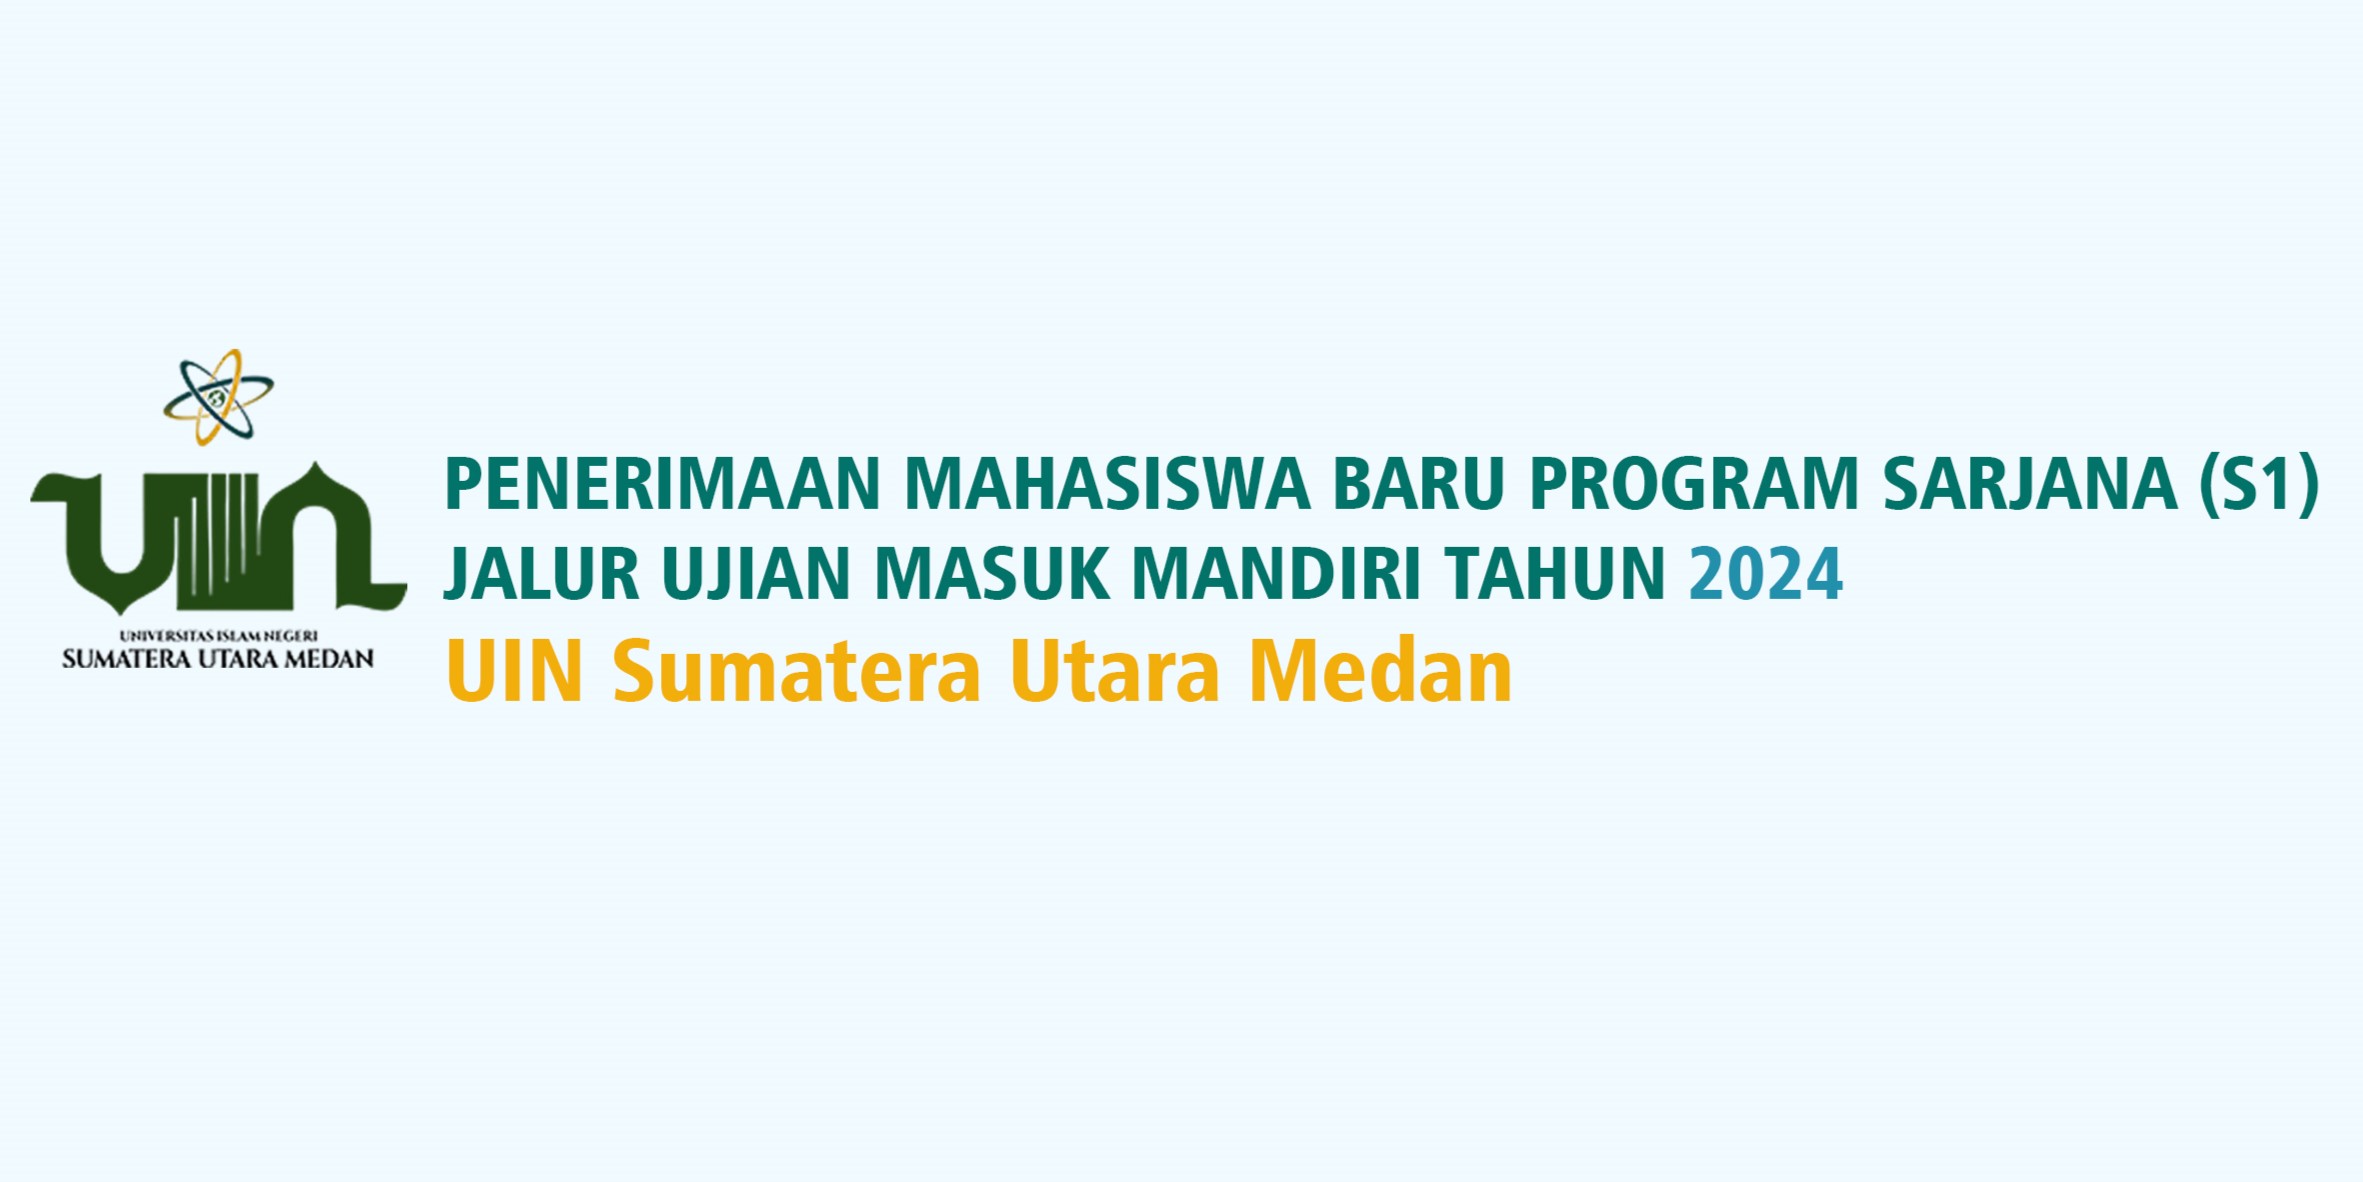 PENERIMAAN MAHASISWA BARU PROGRAM SARJANA (S1) JALUR UJIAN MASUK MANDIRI TAHUN 2024